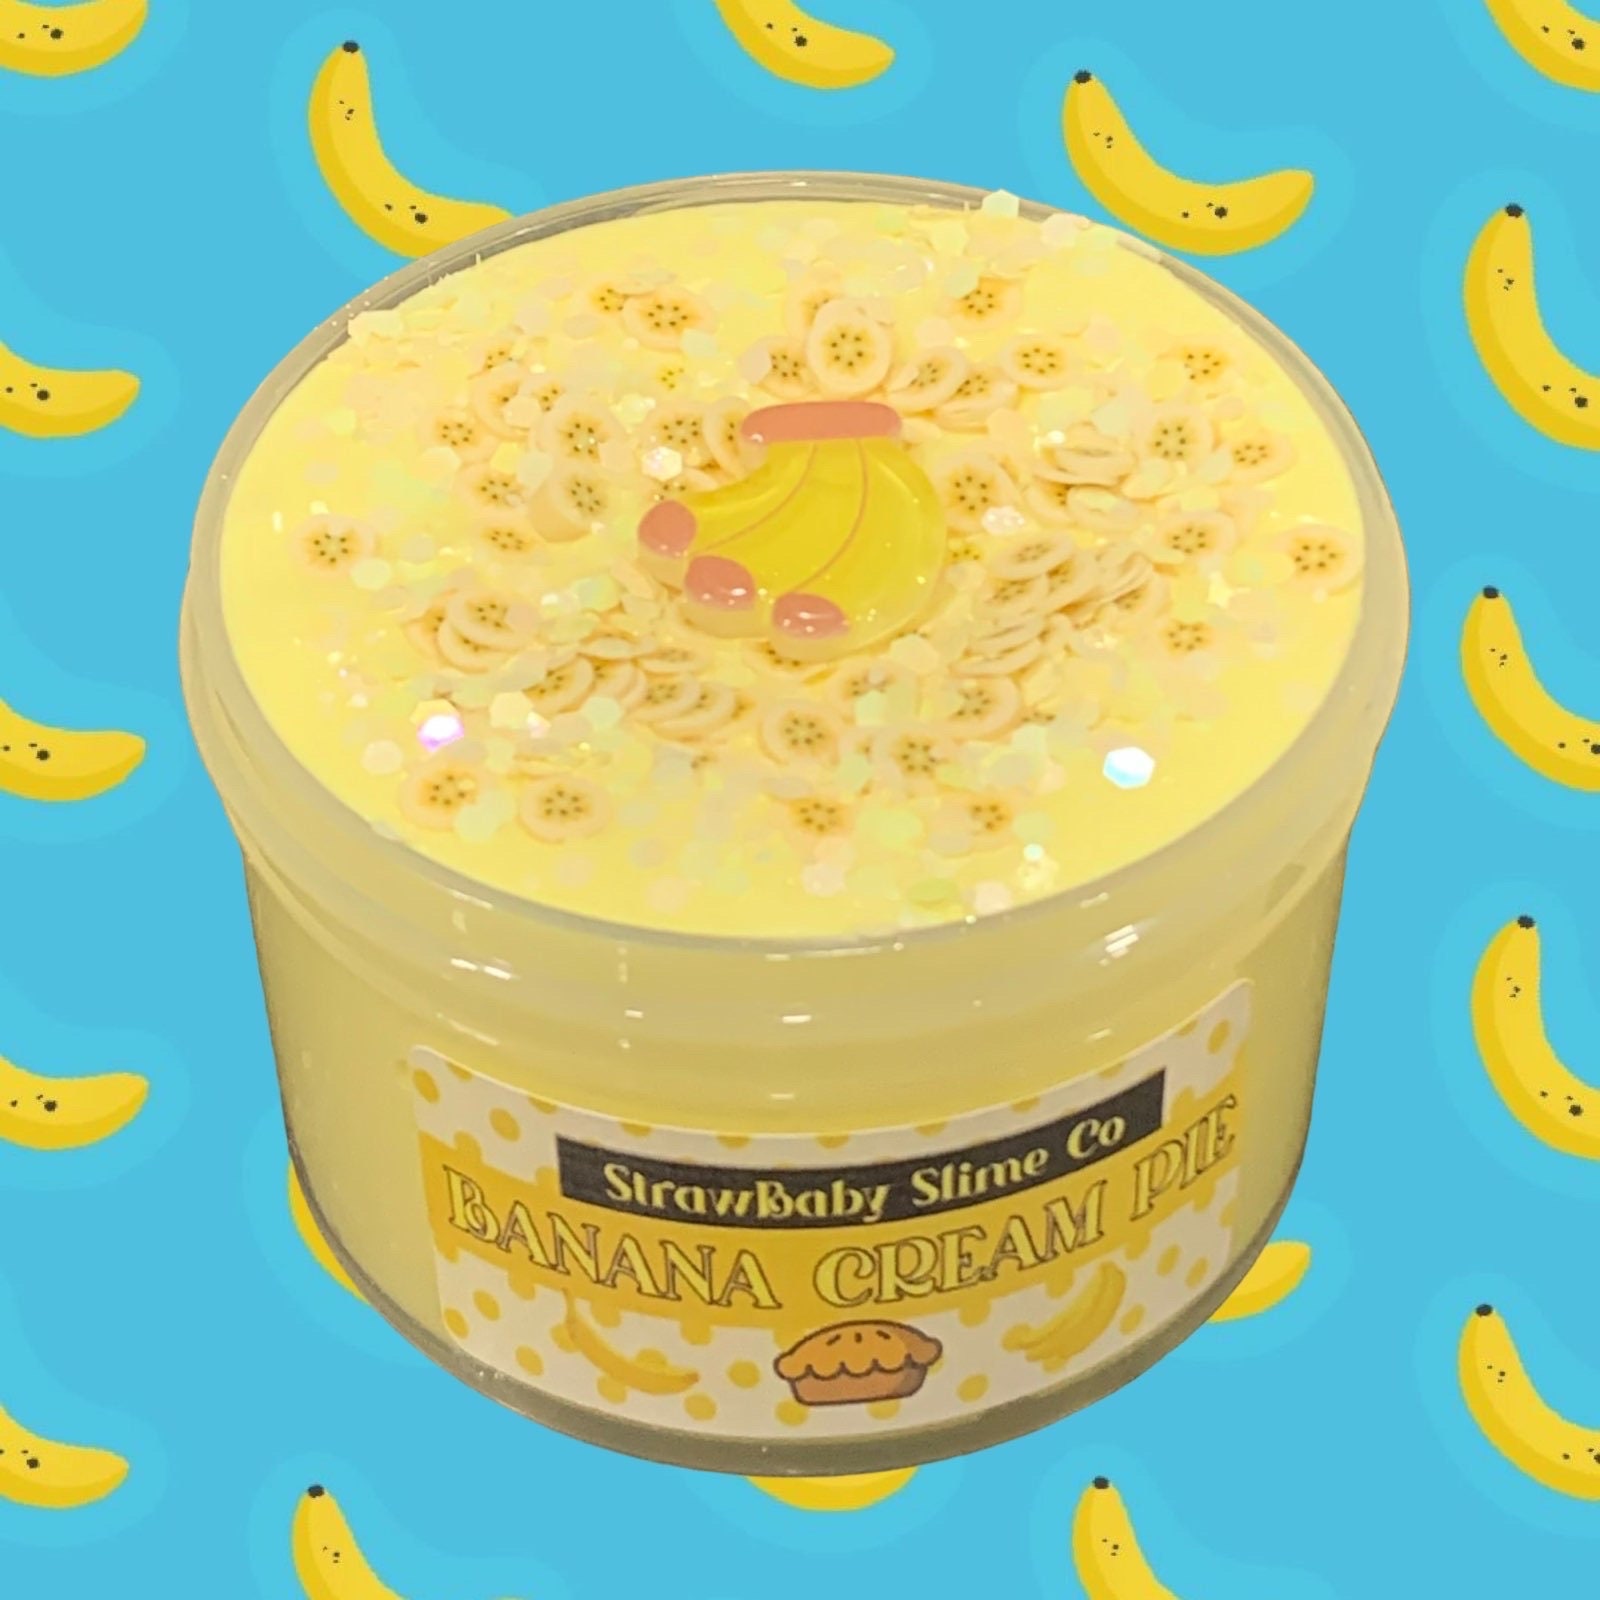 Banana cream pie slime